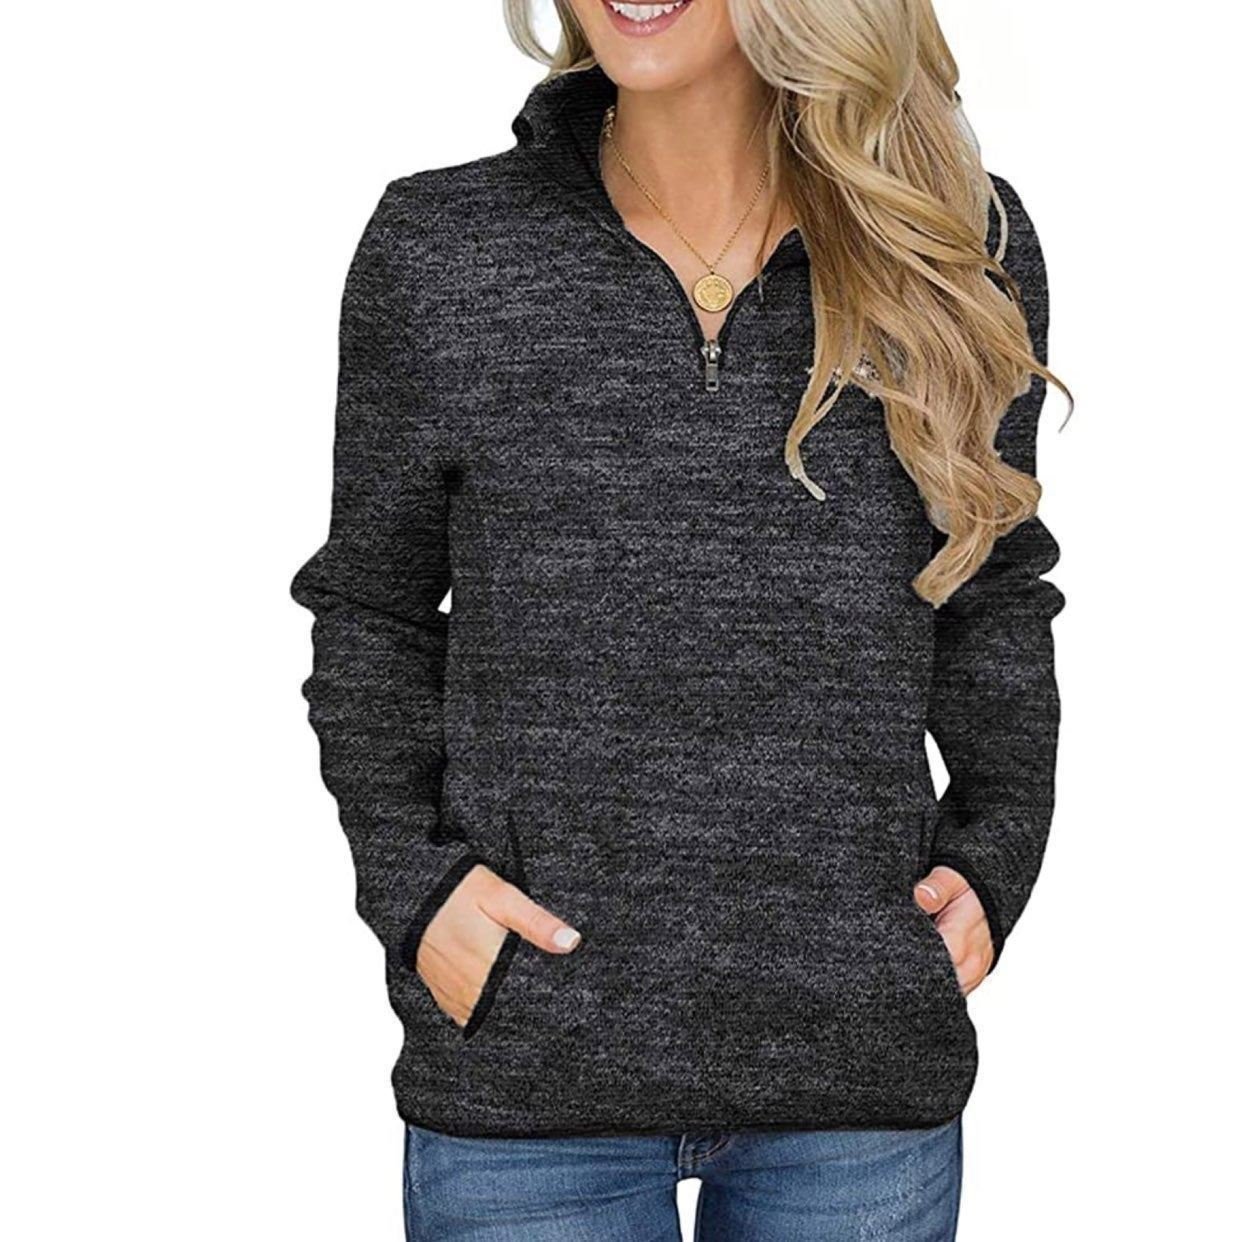 Buy Large gray long sleeve top sweatshirt poAVHgykF hot